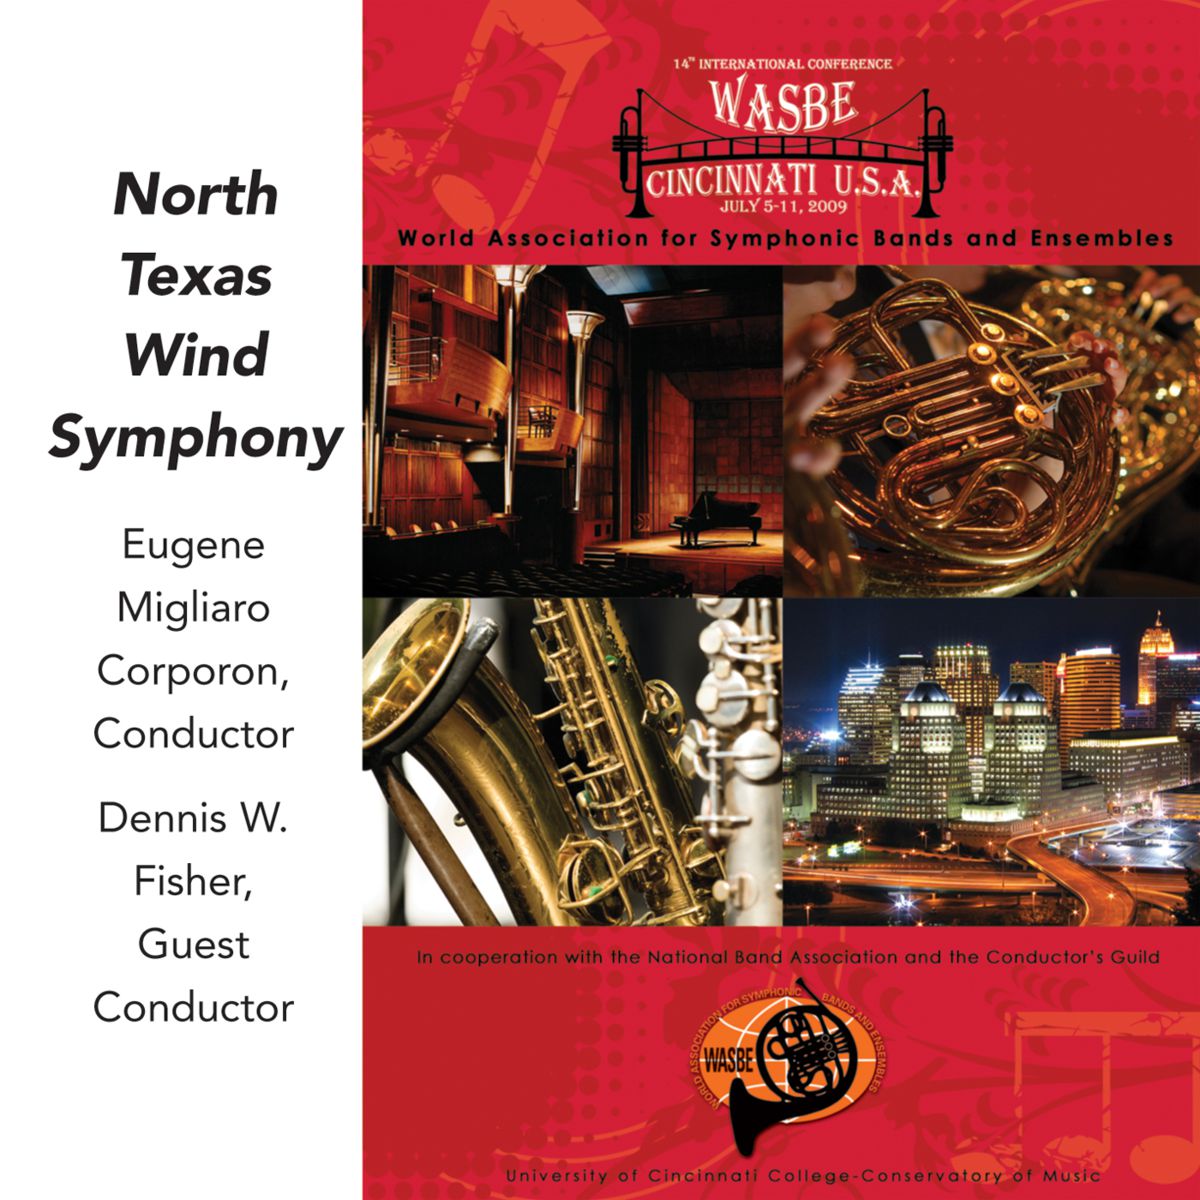 2009 WASBE Cincinnati, USA: North Texas Wind Symphony - cliquer ici